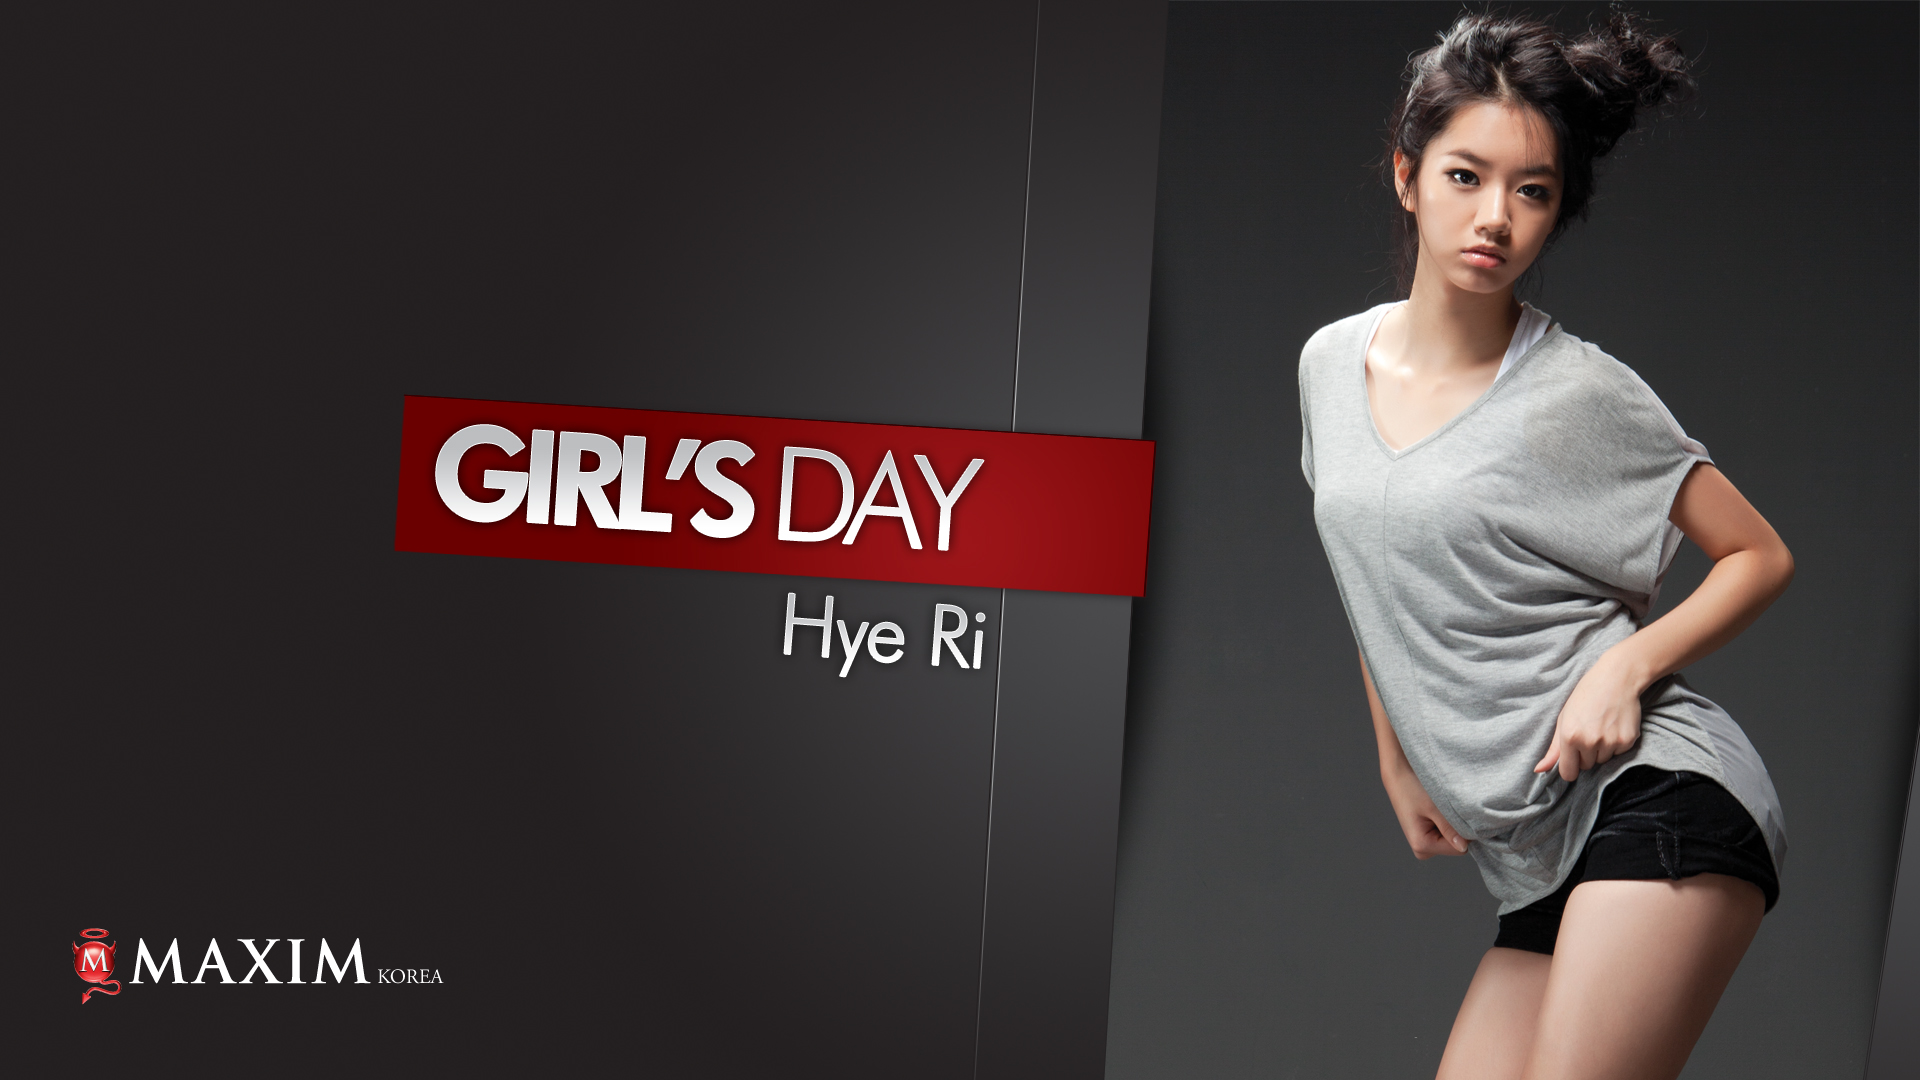 WALLPAPERS] Girls Day Official Wallpaper from Maxim Korea